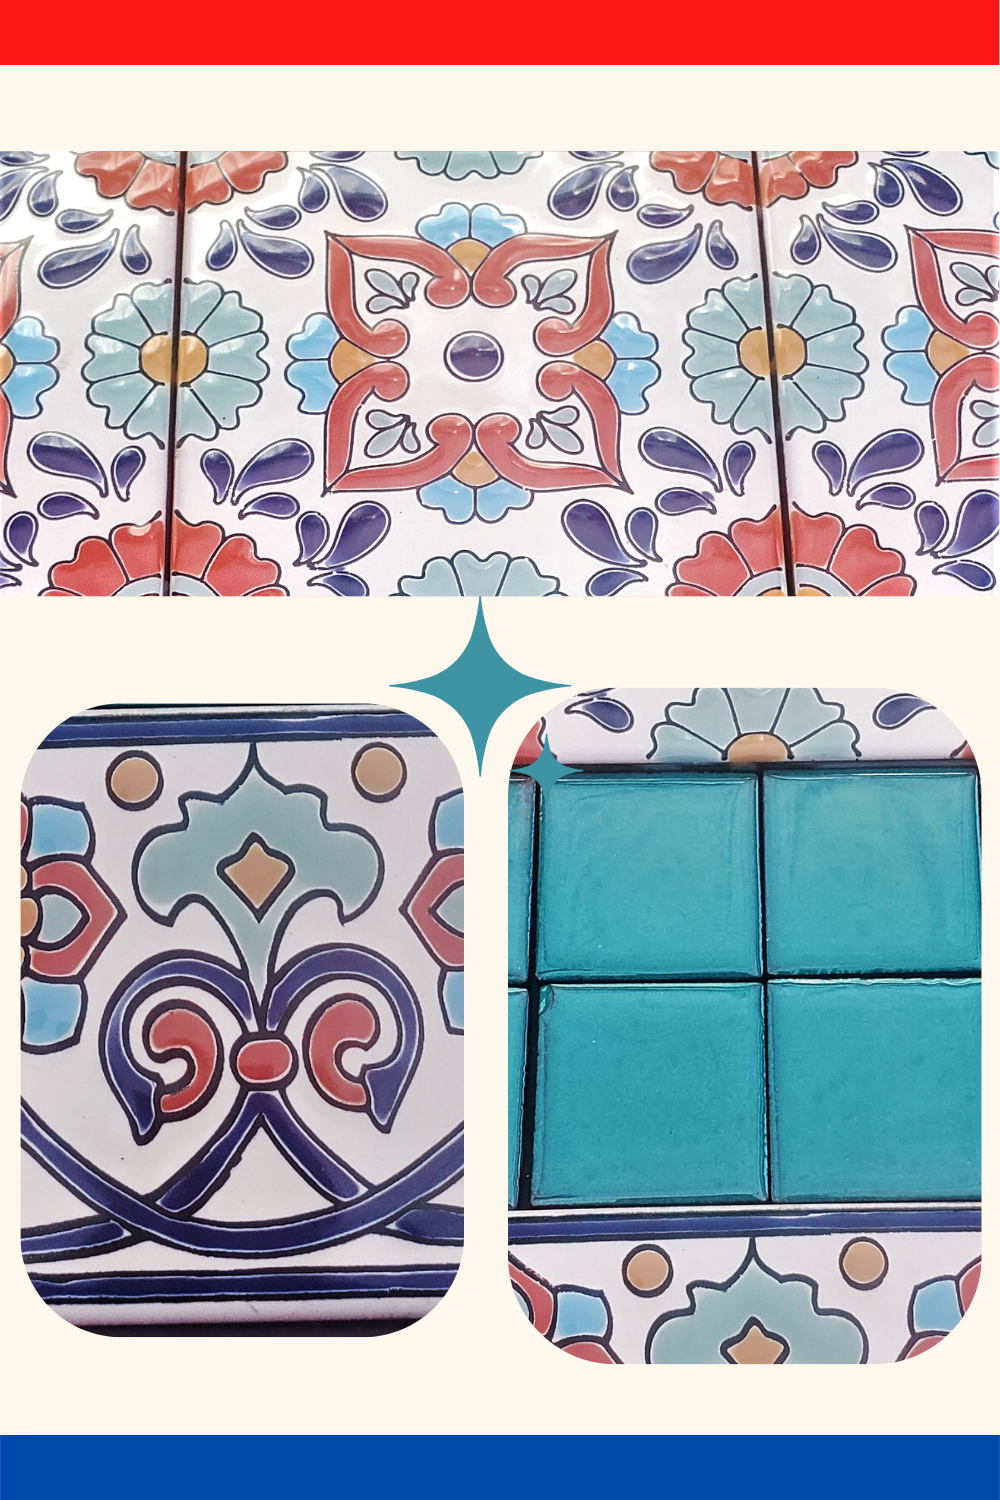 Gondola Flower Hand Glazed Malibu Tile ~ Kitchen Tile, Floor Tile, Spanish Tile (PRICE PER 4 PIECES)